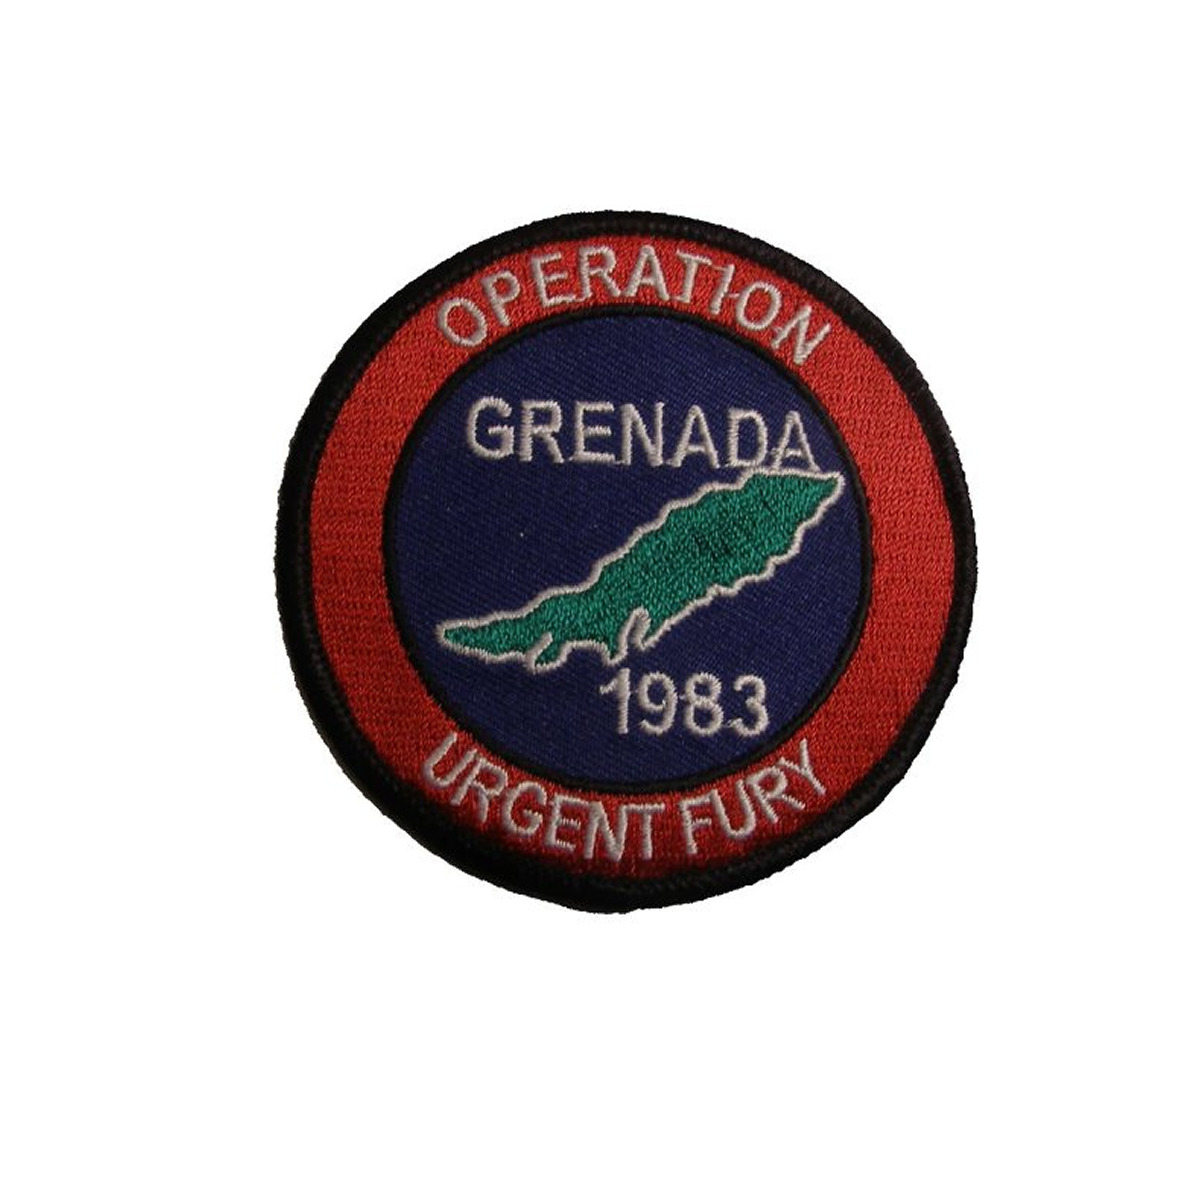 OPERATION URGENT FURY GRENADA 1983 PATCH VETERAN CARIBBEAN US ARMY USMC USN NAVY